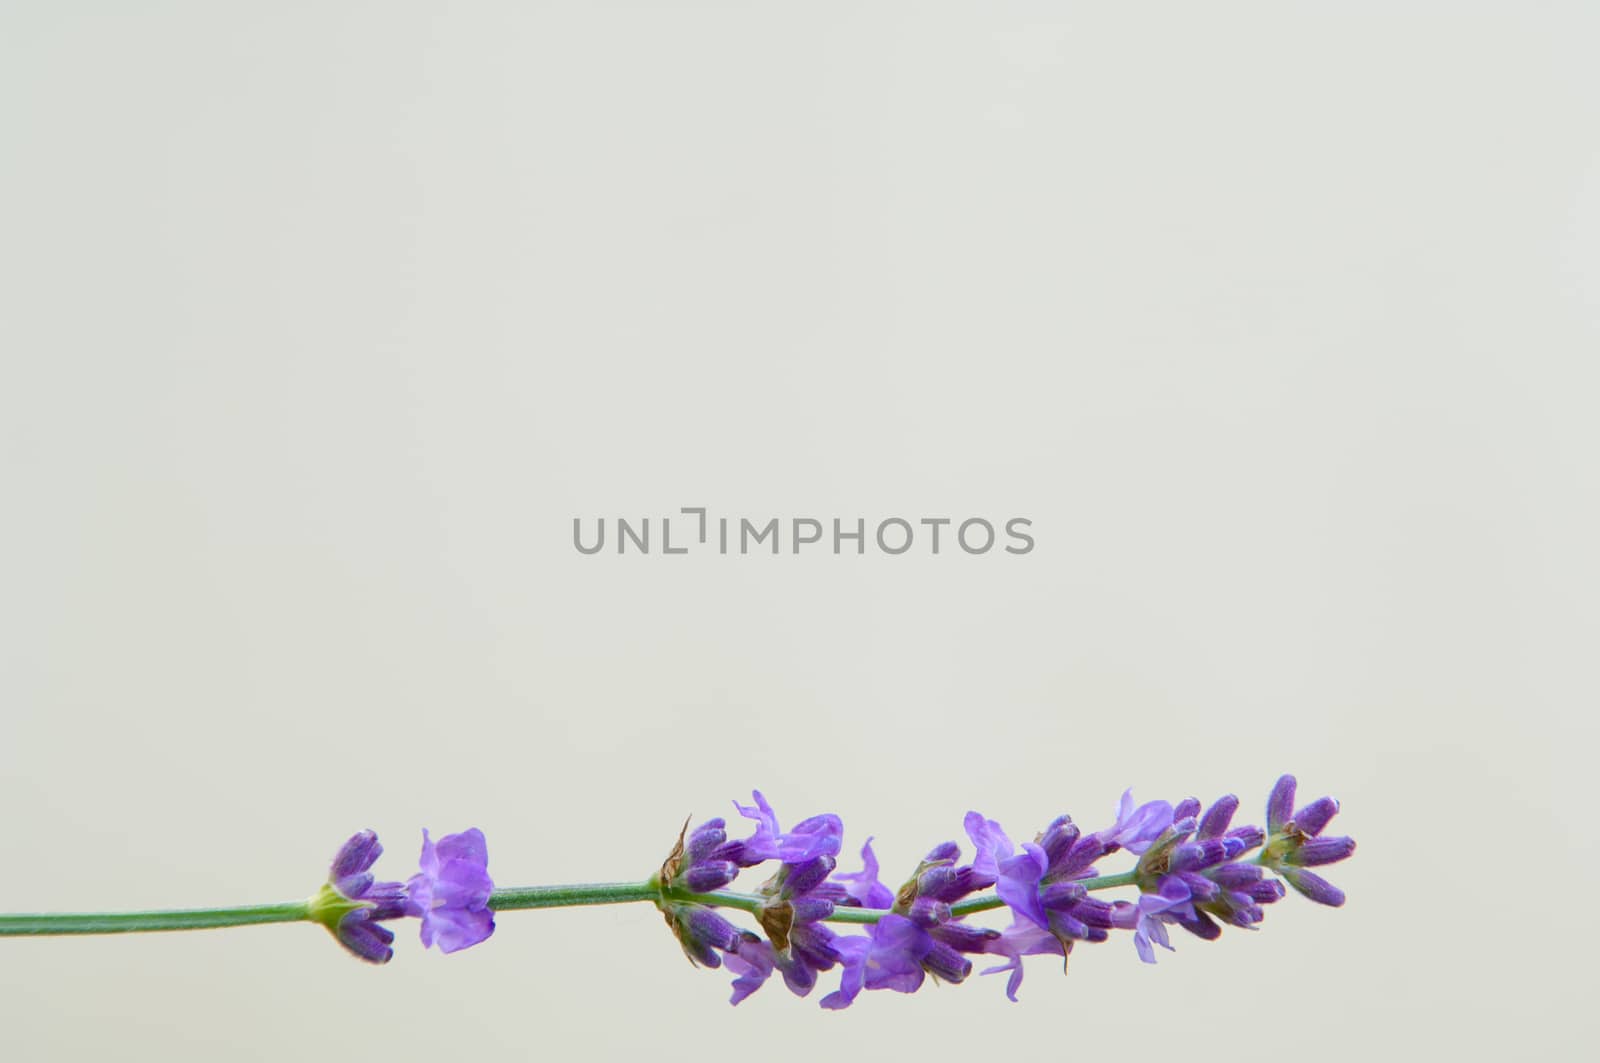 Lavender flower Natural look of Lavender flowers Lavandula by horizonphoto